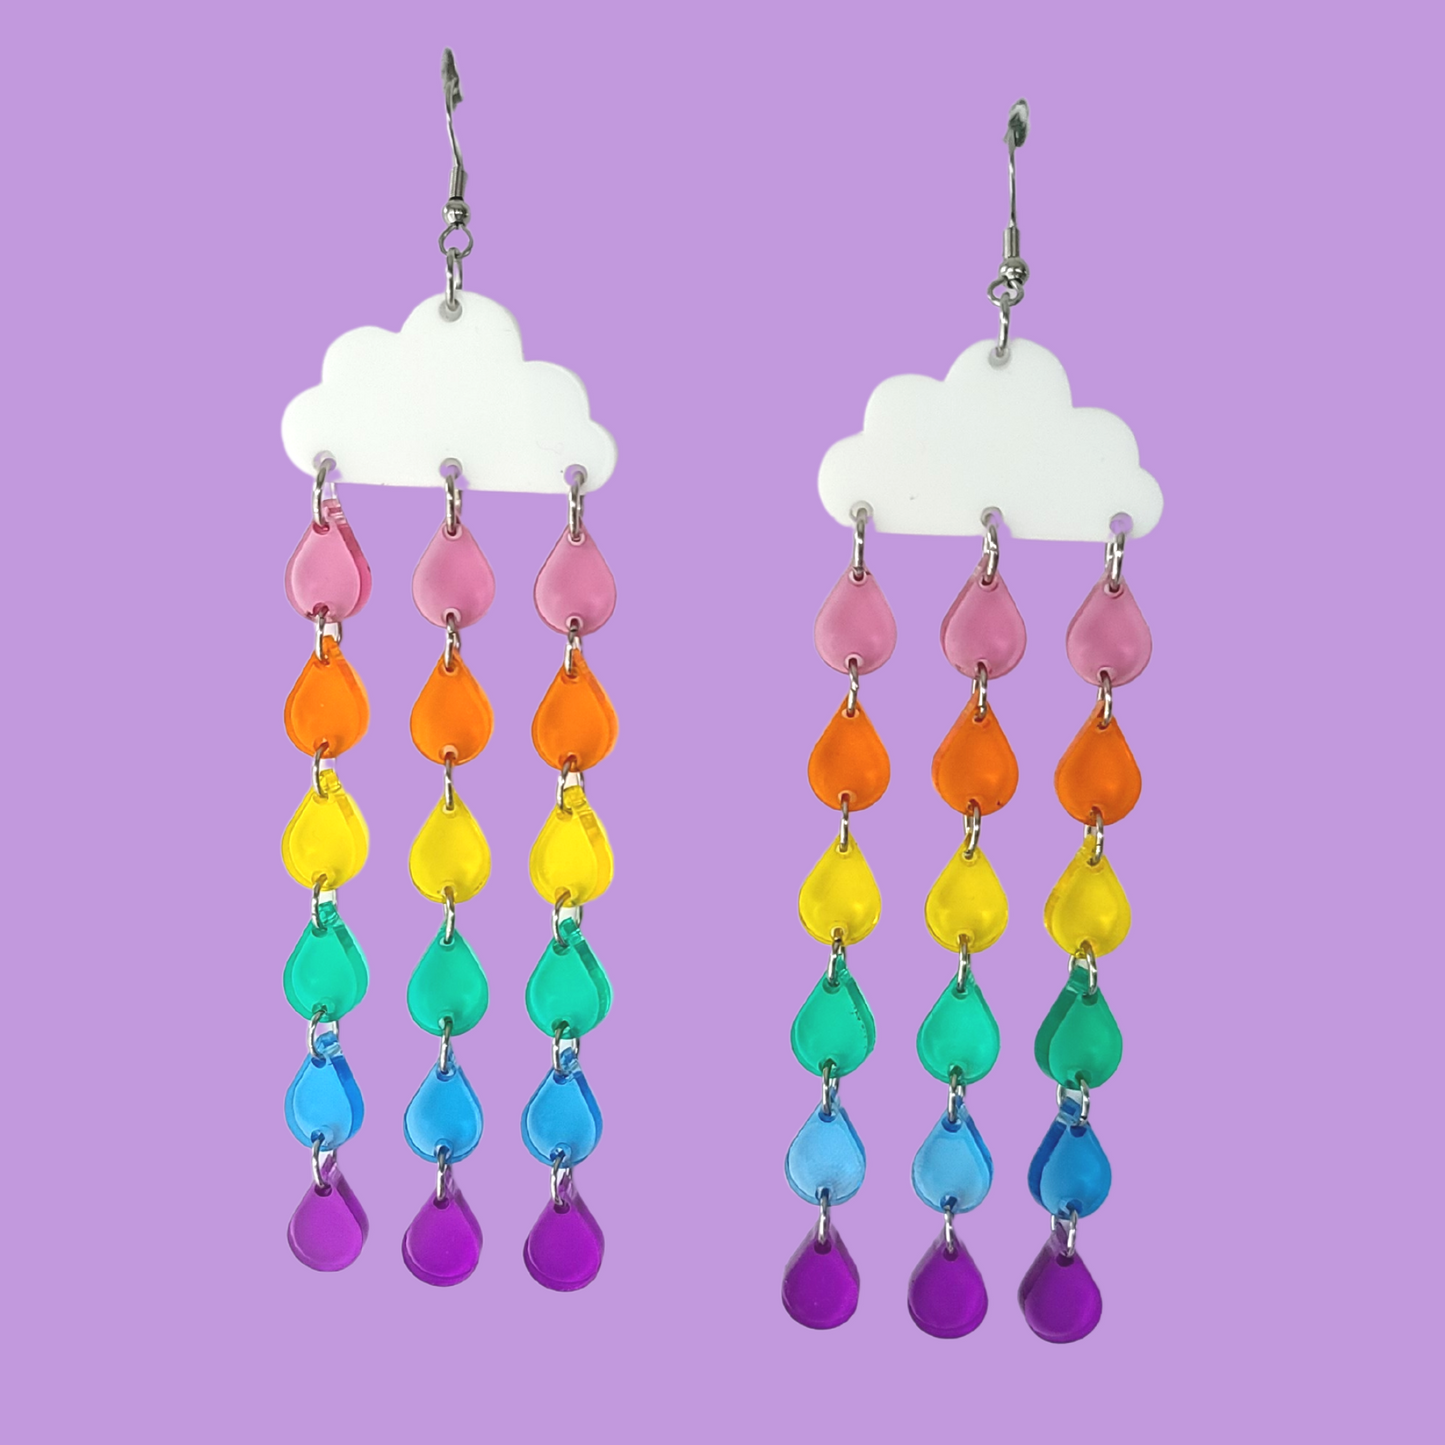 Raining Rainbow Clouds - Earrings - Laser Cut